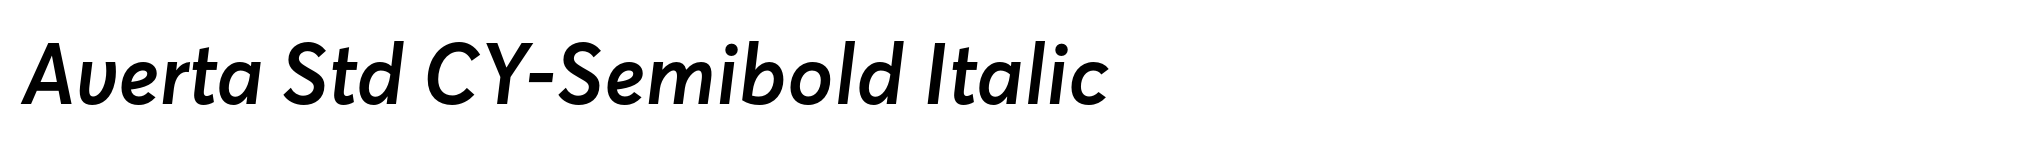 Averta Std CY-Semibold Italic image